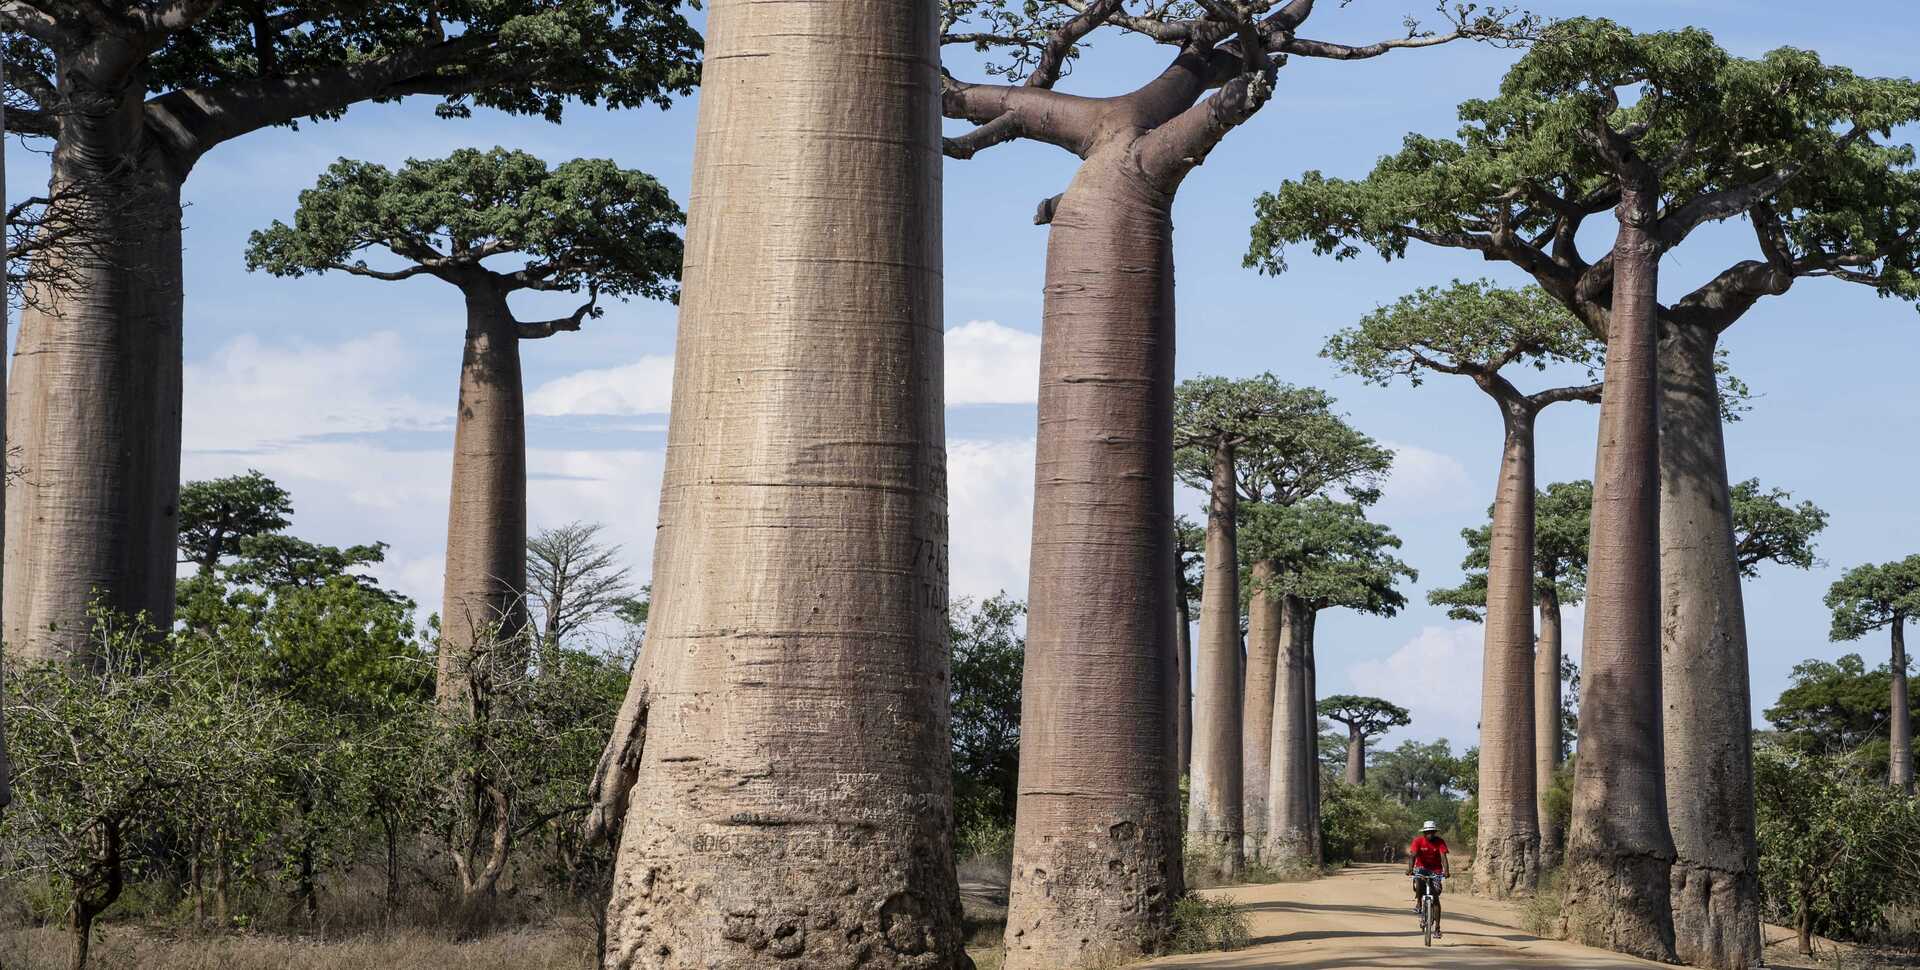 A man on a bike rides through a grove of baobab trees in Madagascar